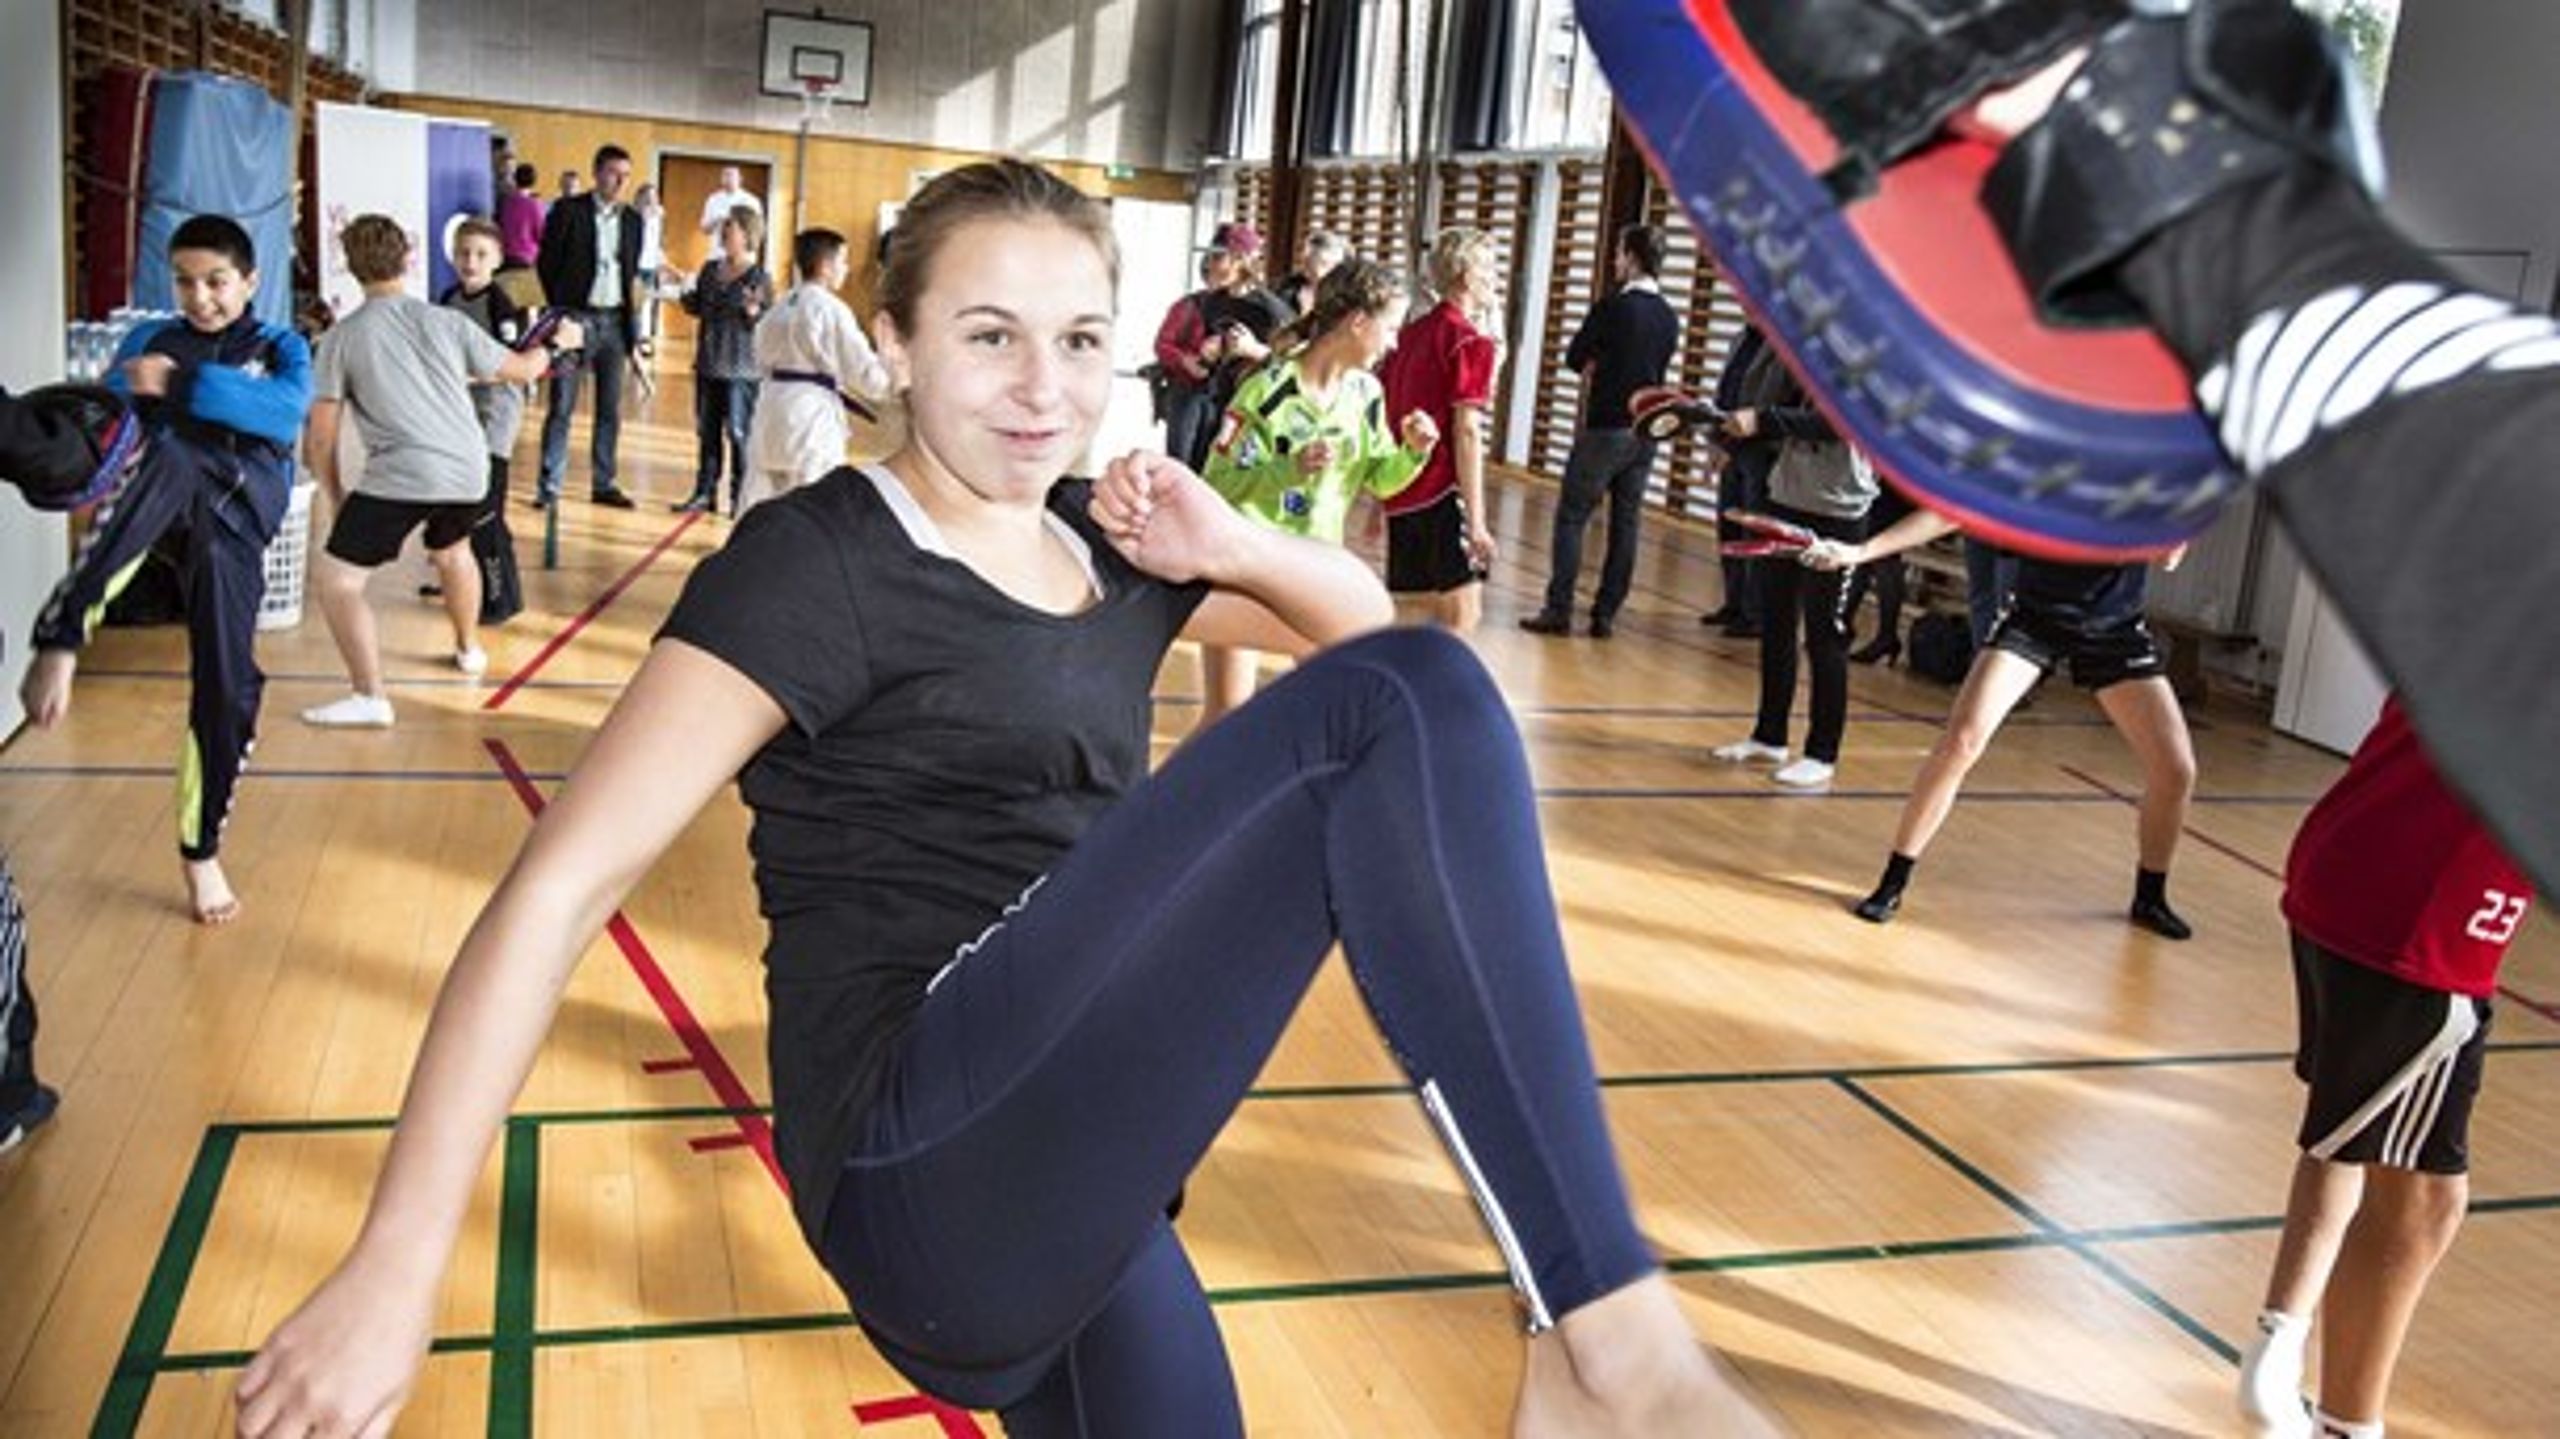 Idræt er mest populært blandt elever, som også dyrker sport eller motion i fritiden, viser tal fra ’Danskernes motions- og sportsvaner’.&nbsp;